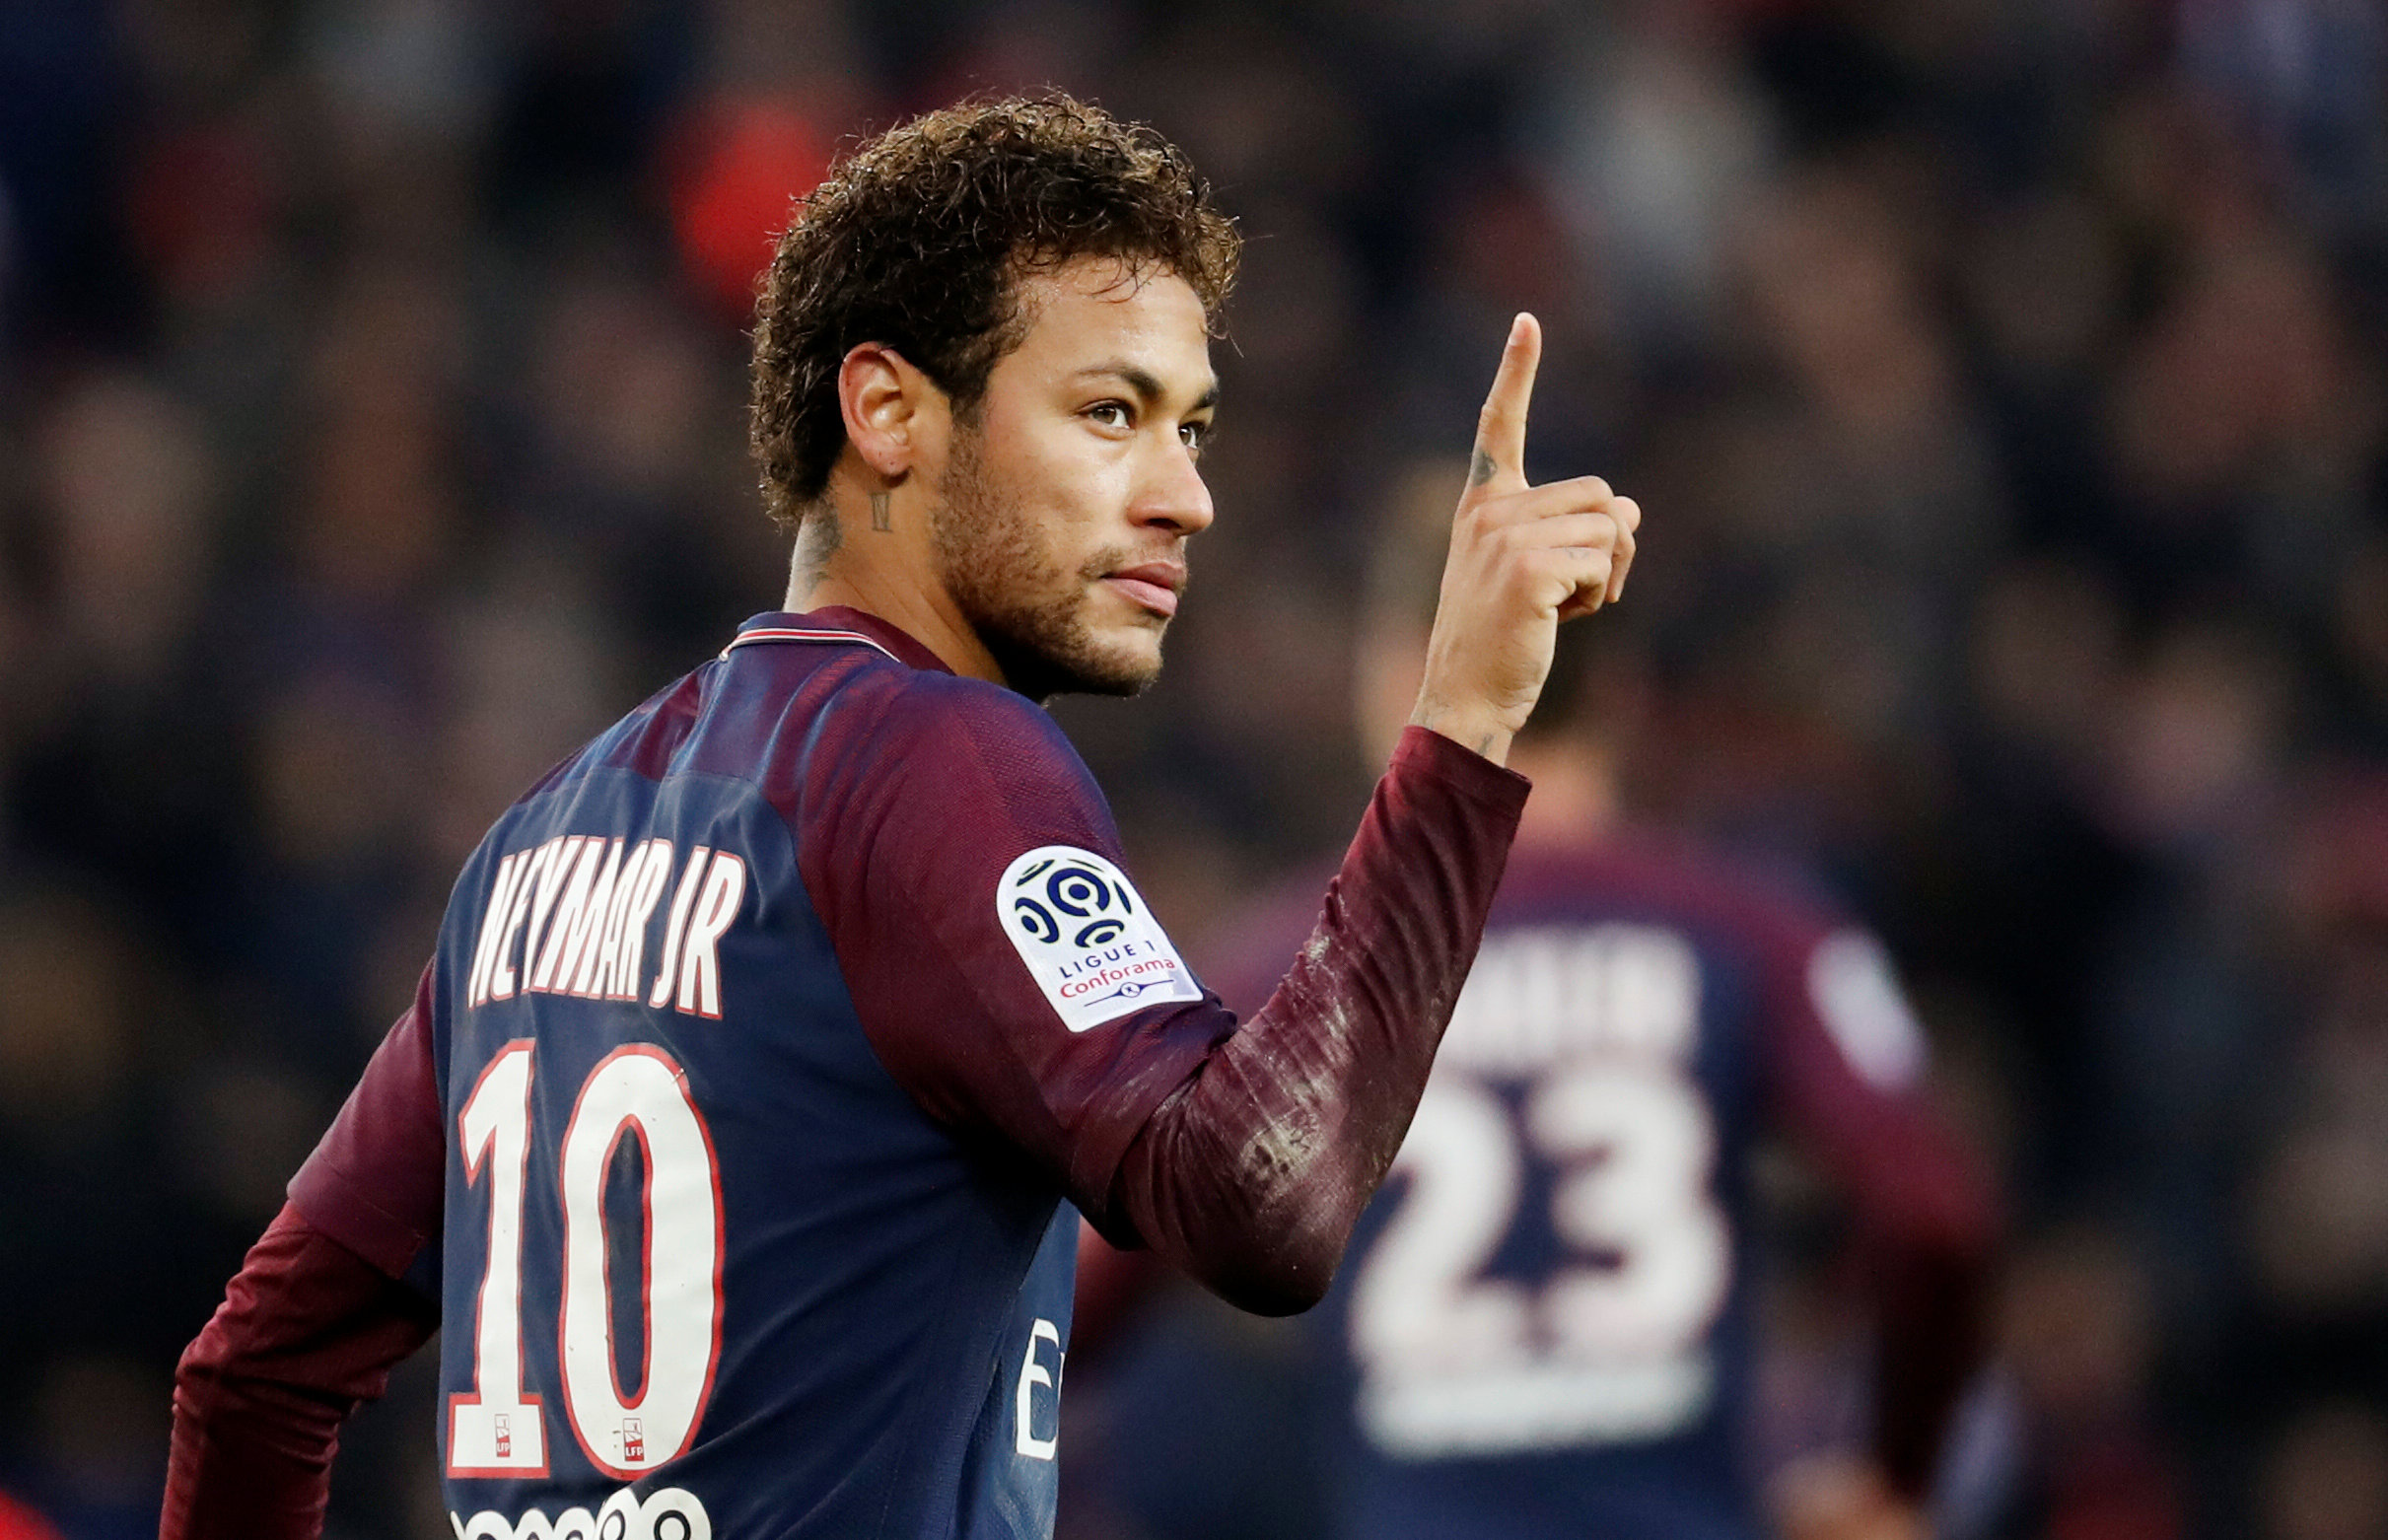 “Vine al PSG para hacer historia”: Neymar 